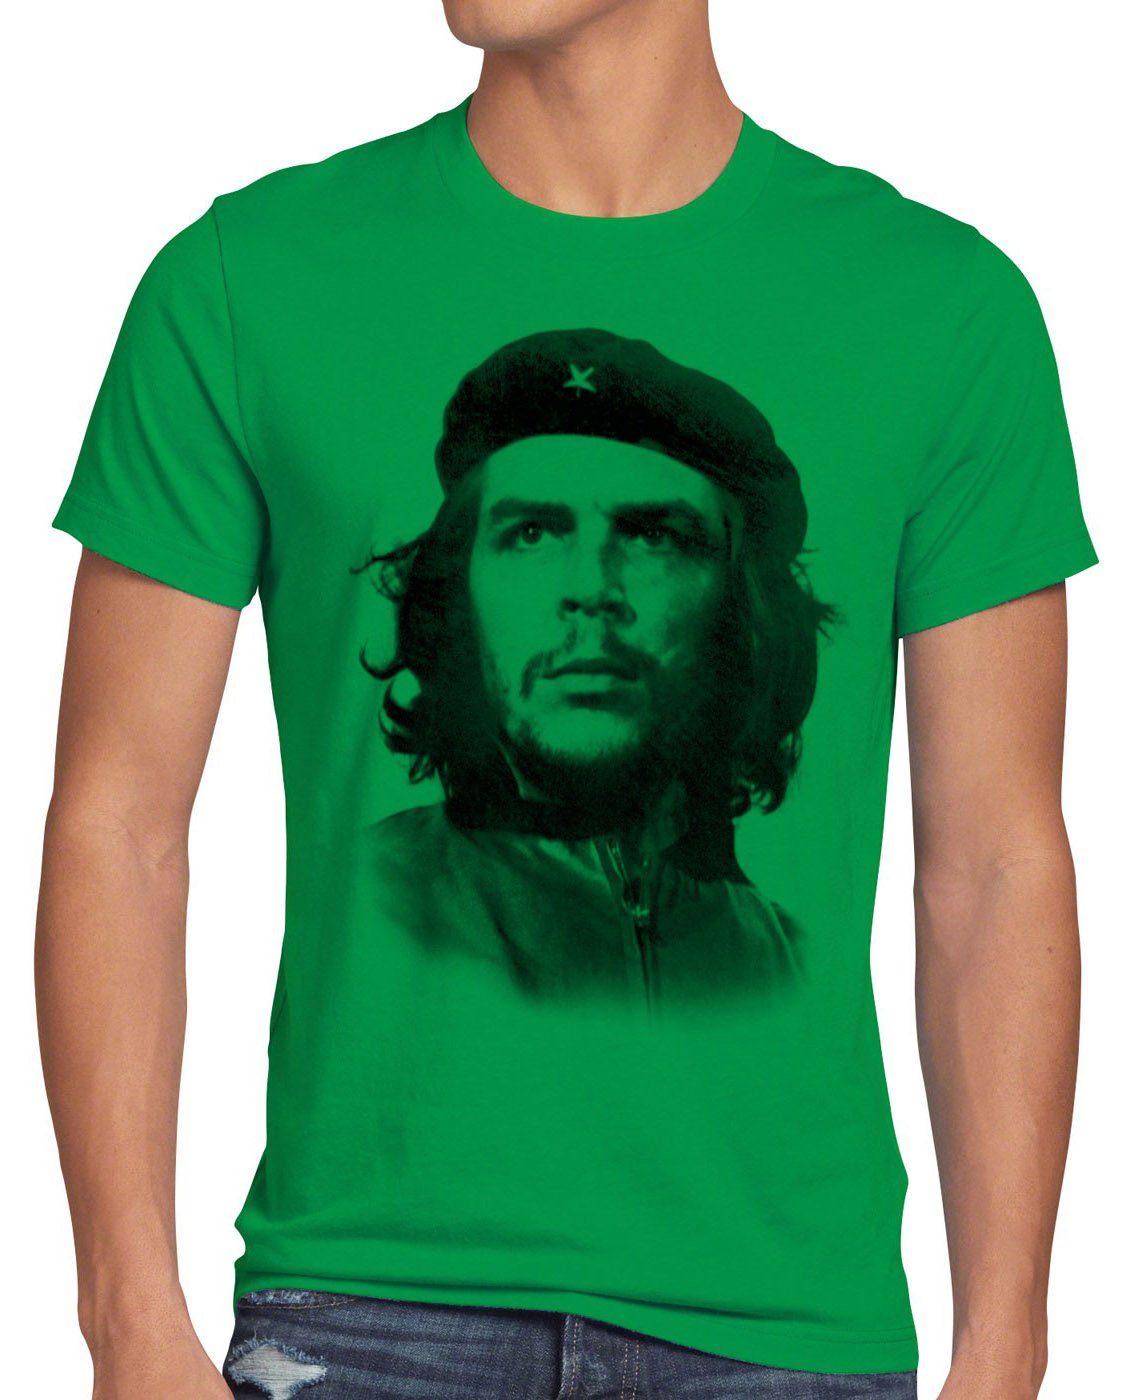 style3 Print-Shirt Herren T-Shirt CHE Guevara Foto cuba kuba revolution Havana Kommunismus castro grün